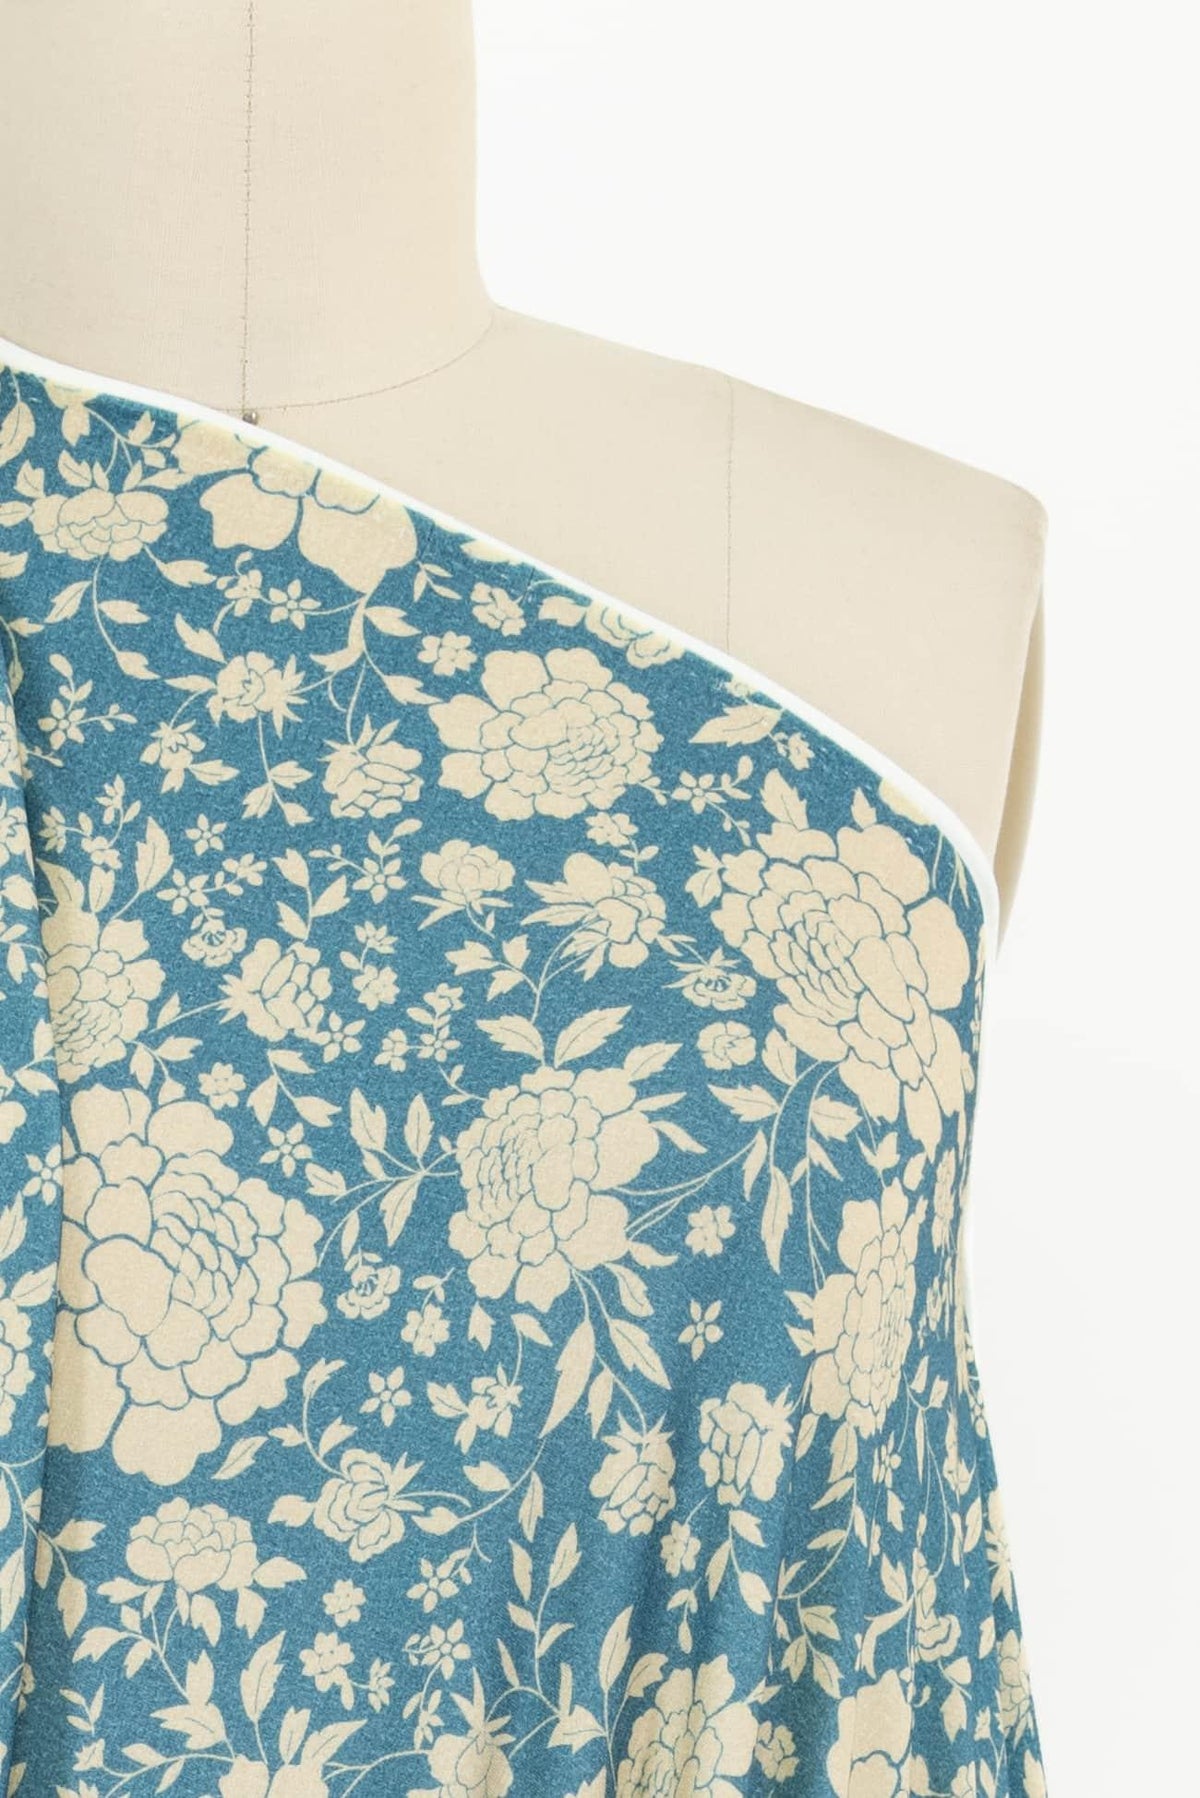 Beverly Rayon Knit - Marcy Tilton Fabrics